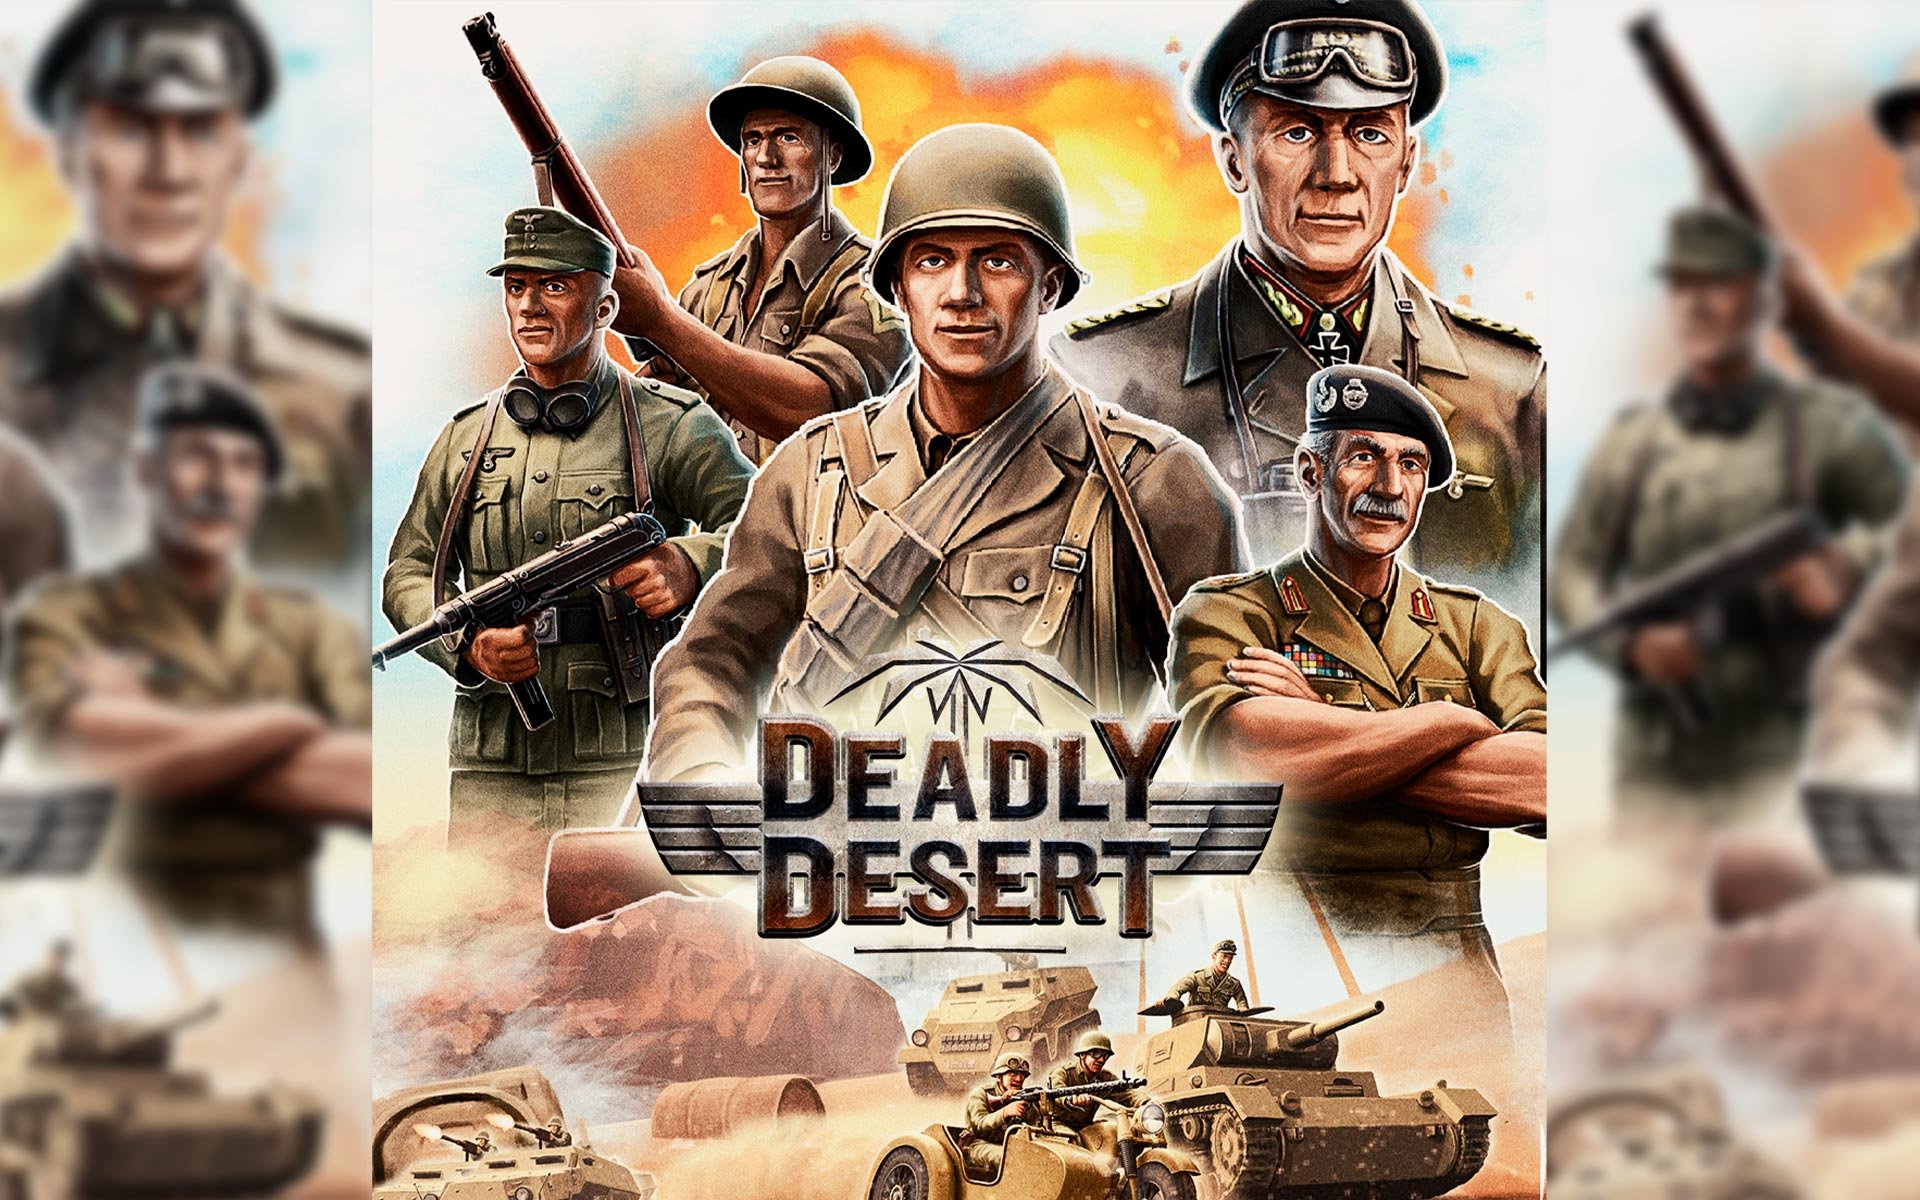 Compre 1943 Deadly Desert a partir de R$ 19.99